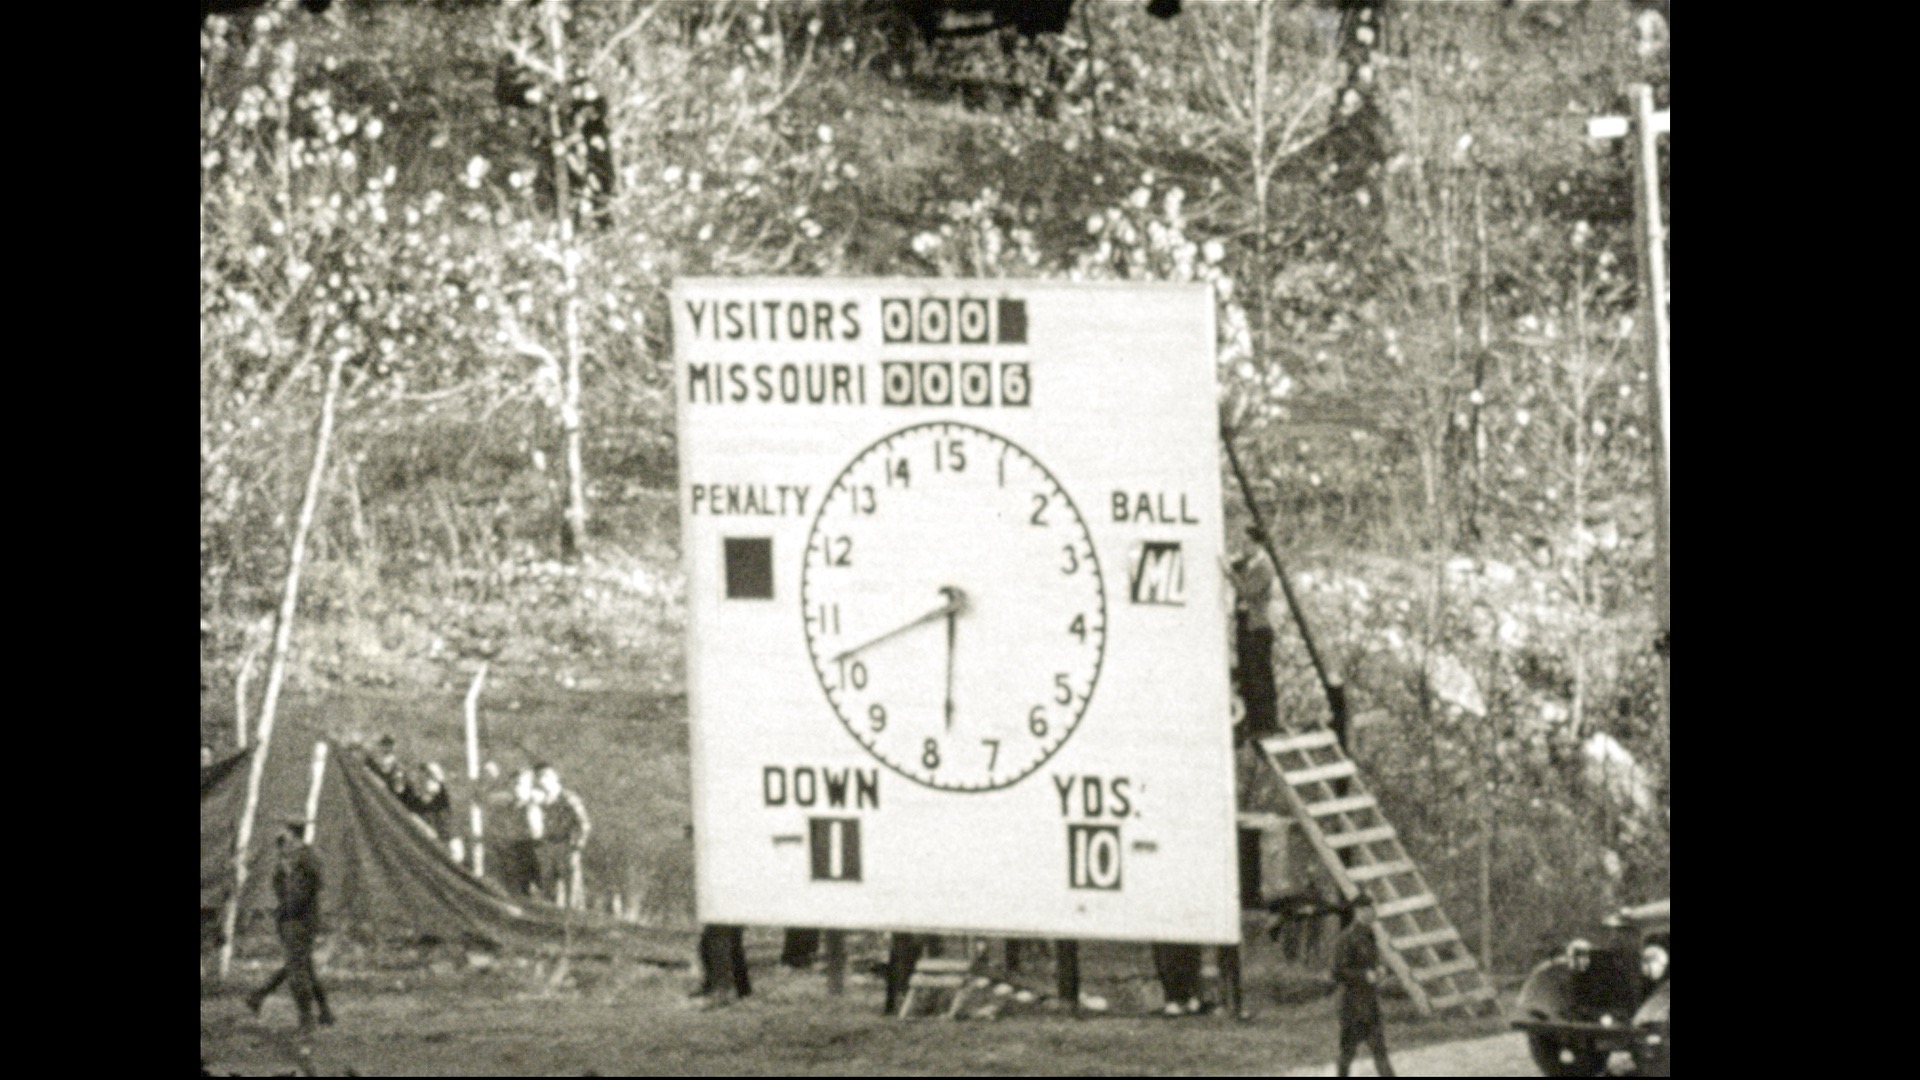 MSC Football vs. Missouri, 1938